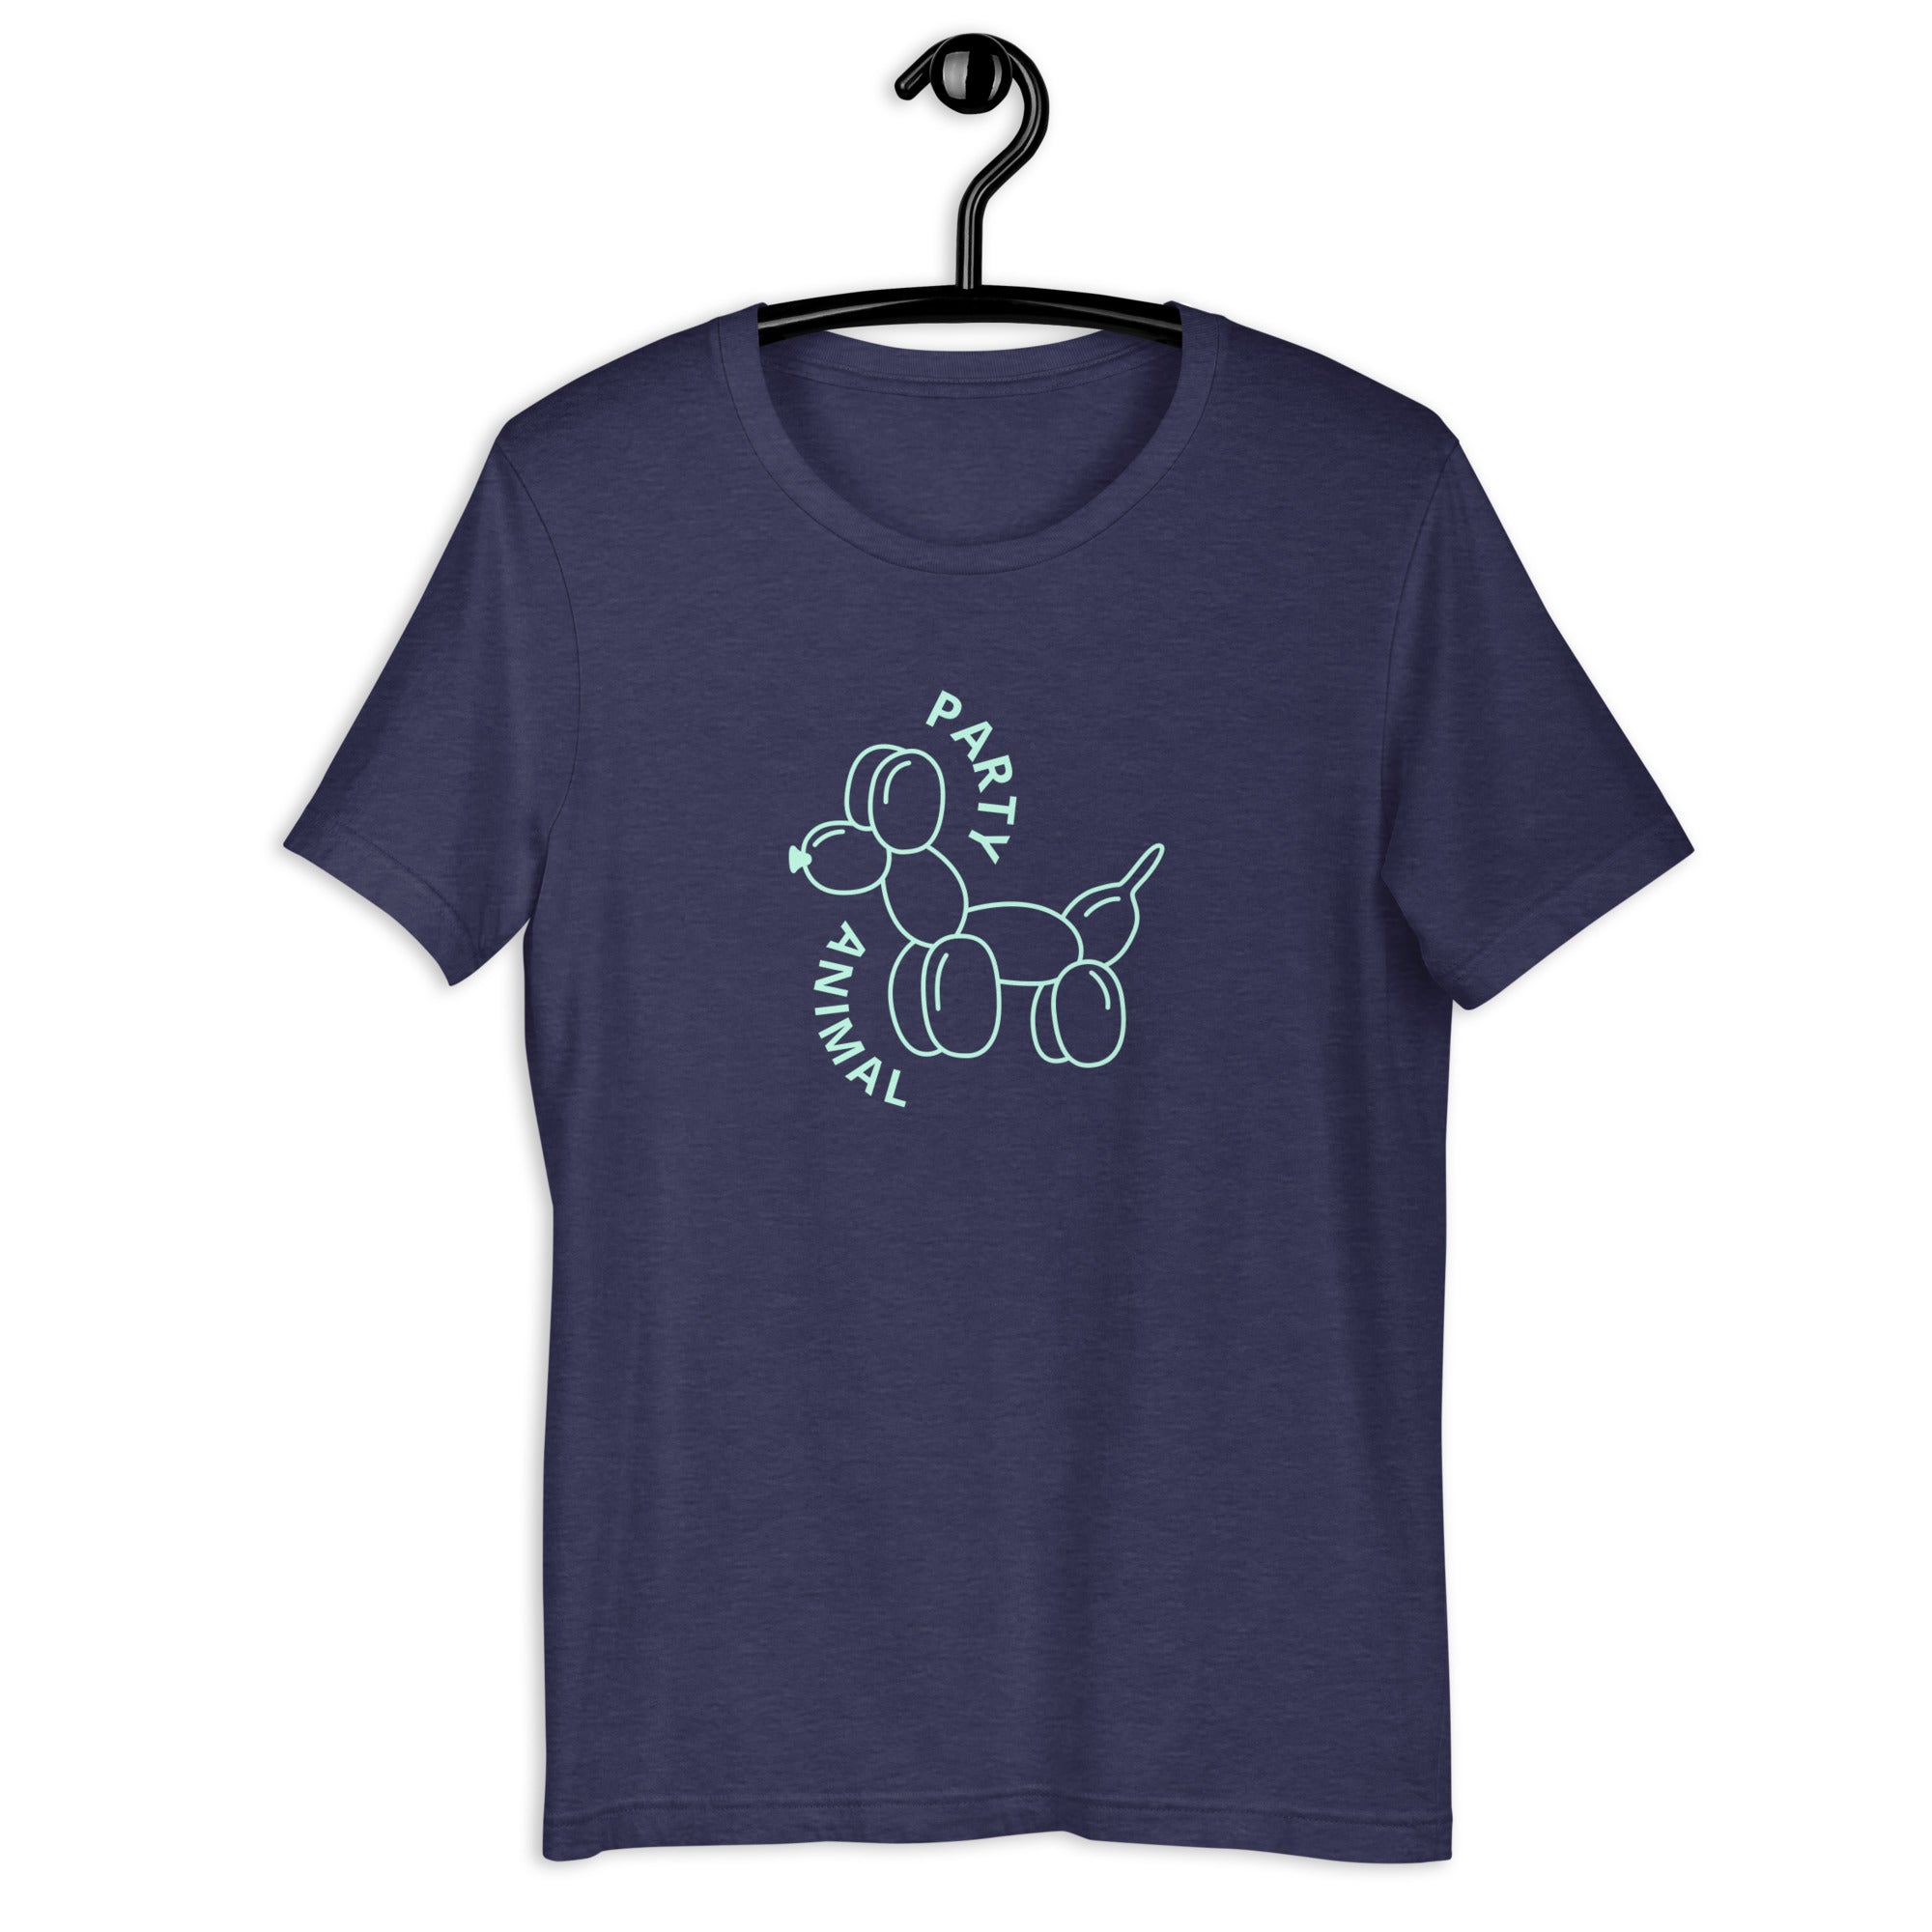 "Party Animal" Unisex t-shirt